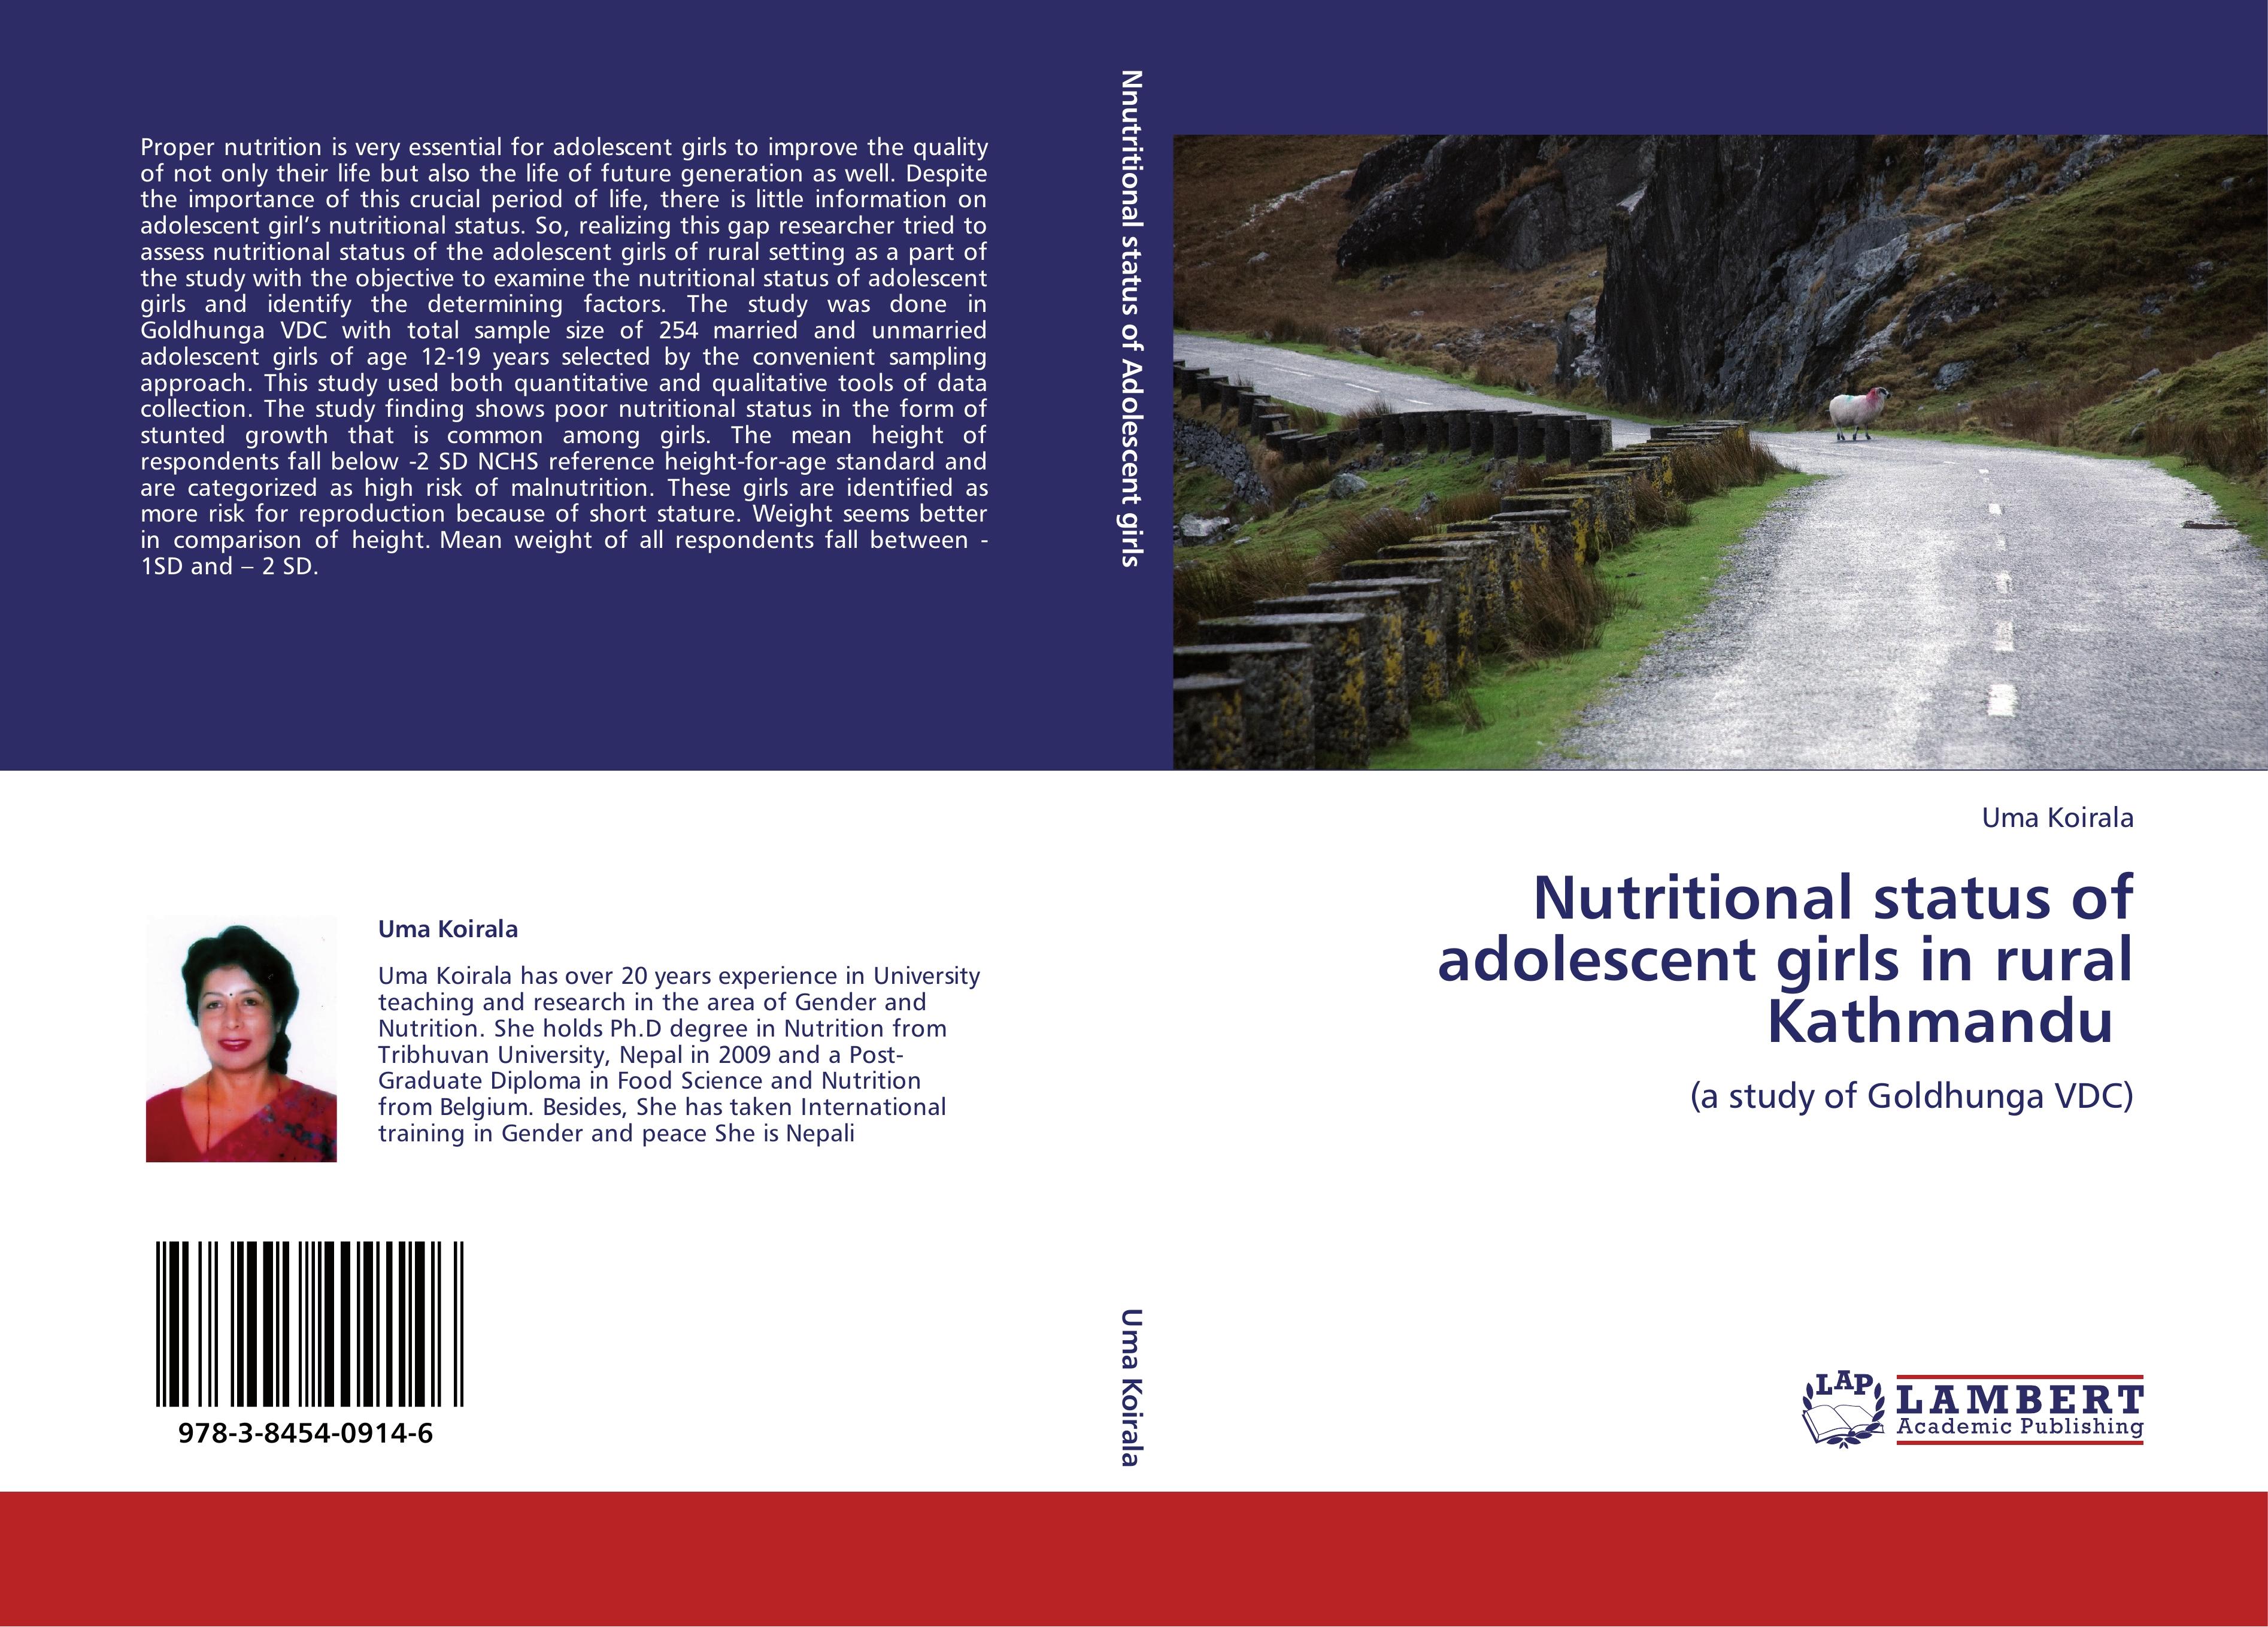 Nutritional status of adolescent girls in rural Kathmandu - Uma Koirala